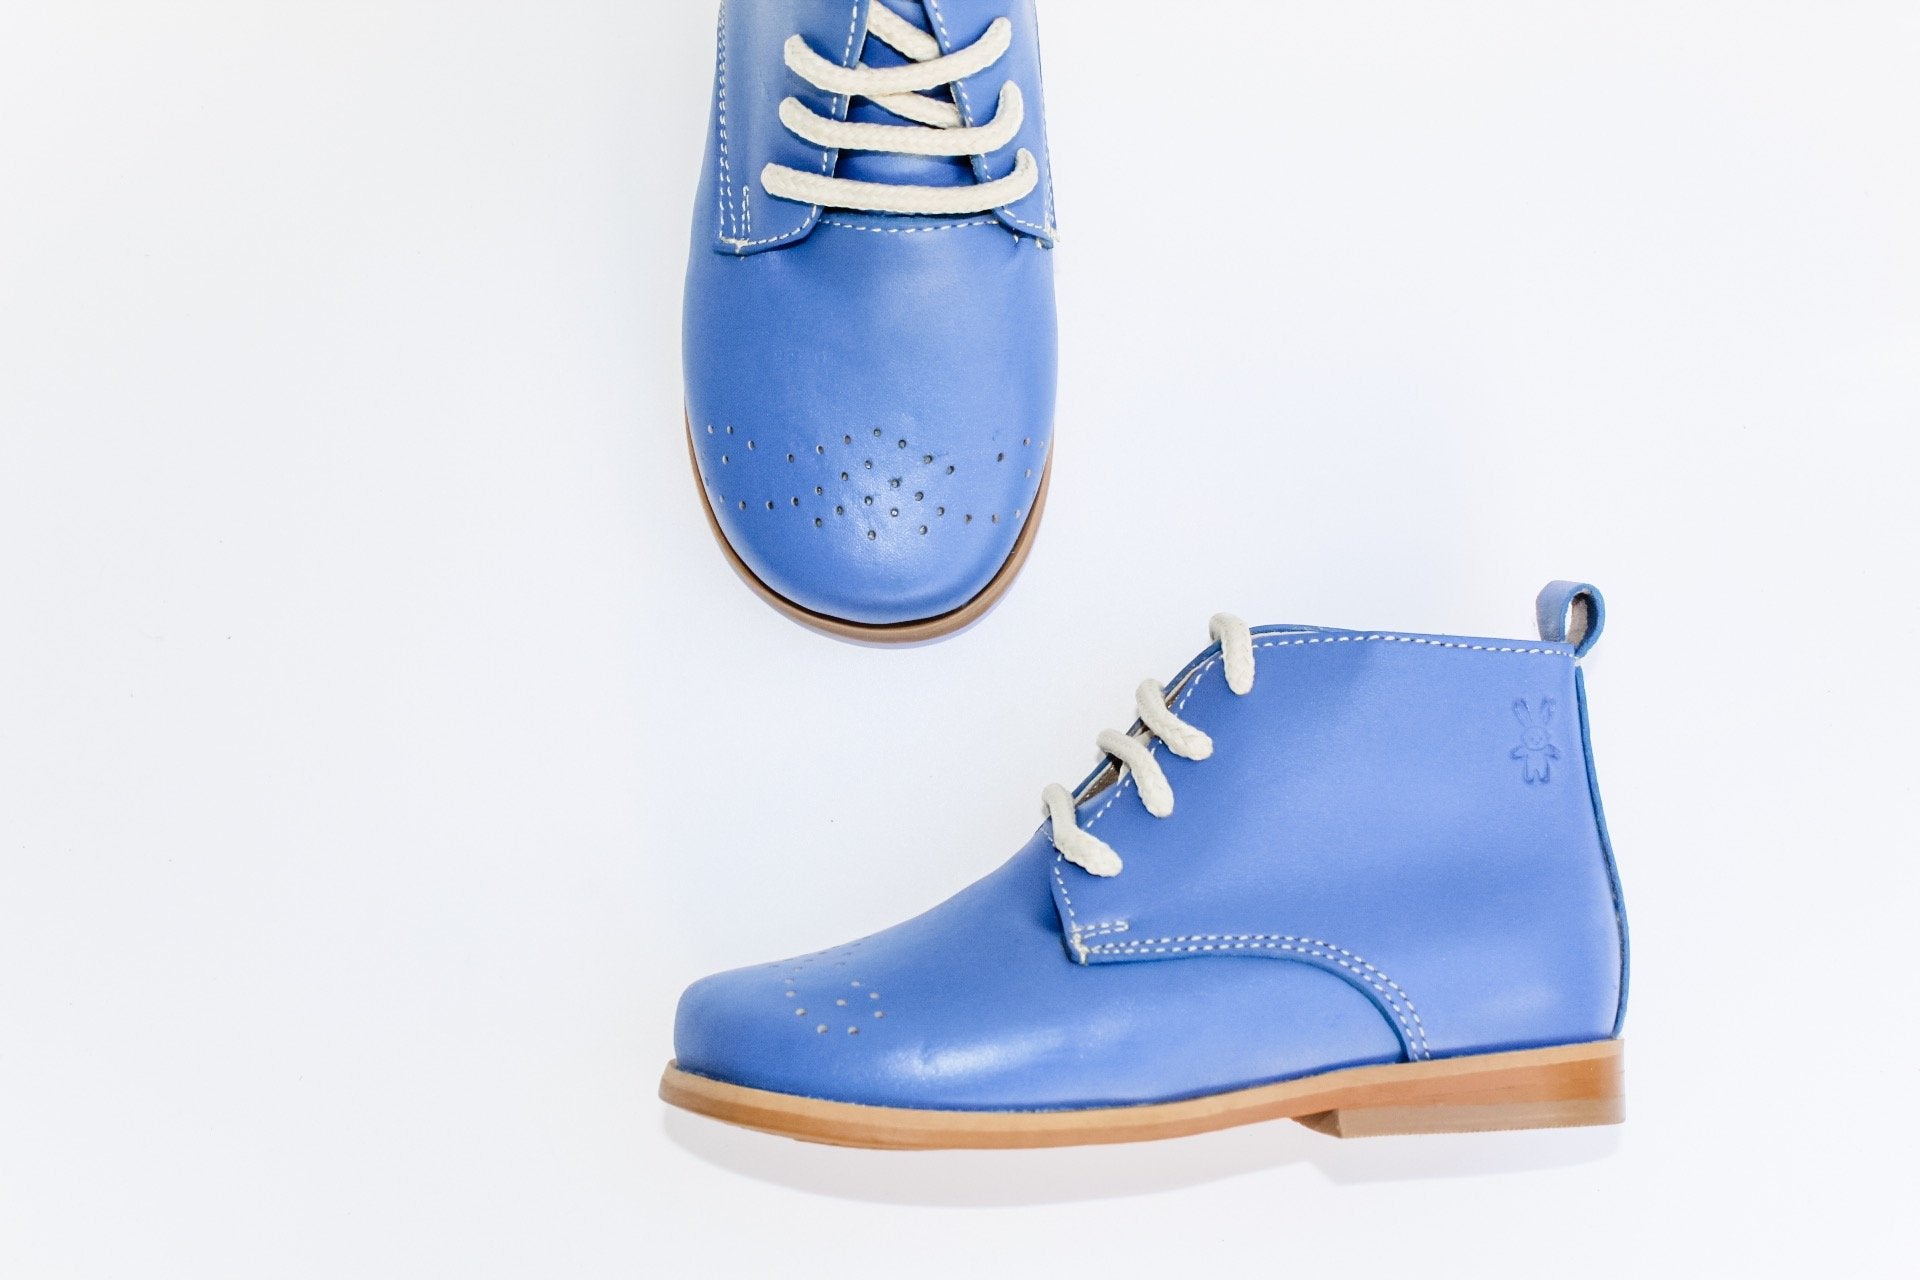 Piccolo Bota/Boot - Azul/Blue